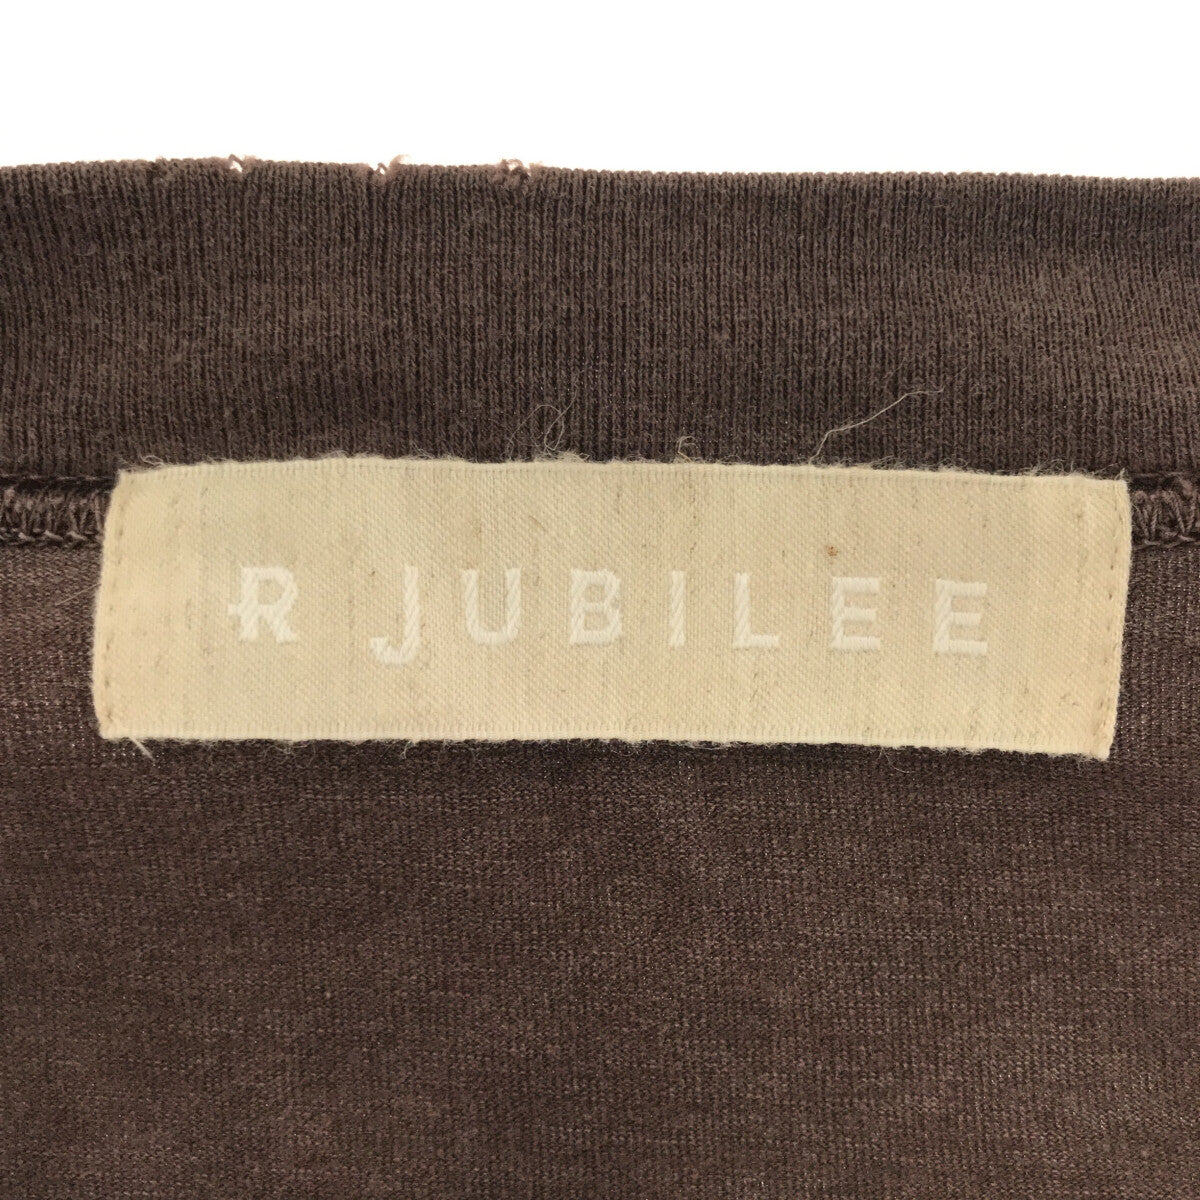 R JUBILEE / アールジュビリー | Roll UP Over Tee / ダメージ加工 ロールアップ オーバーTシャツ | F |